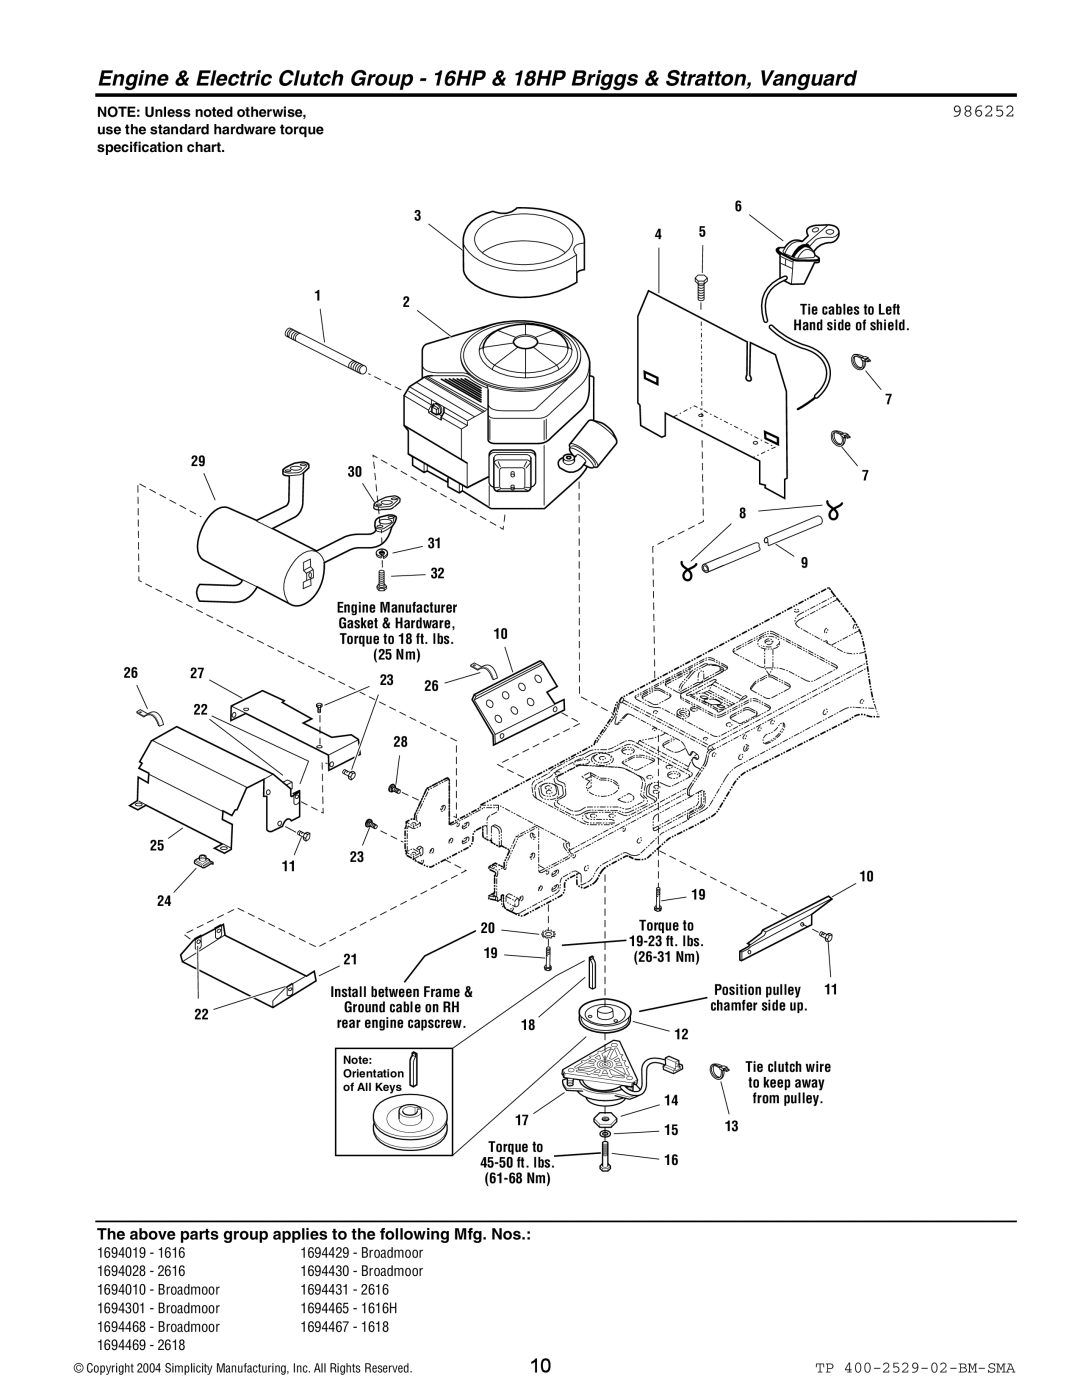 Snapper Broadmoor 2600 manual 986252, Torque to 19-23 ft. lbs 26-31 Nm 